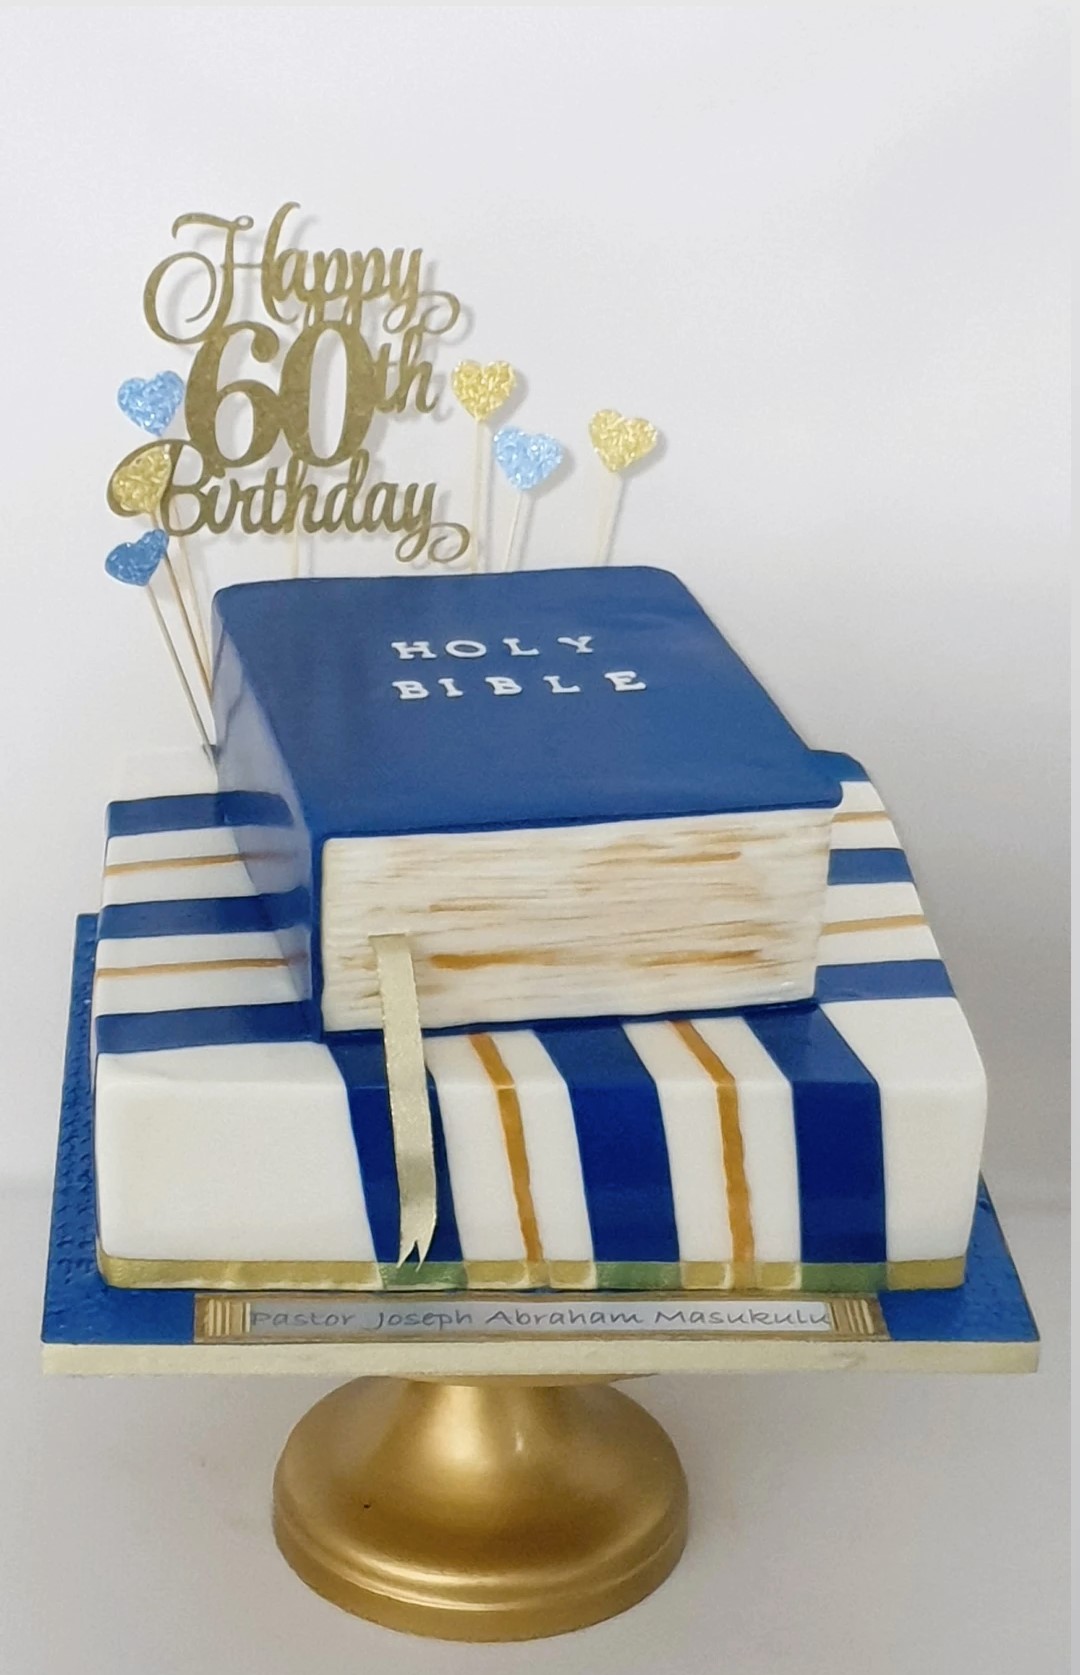 Bible Cake - Picture of Goodies Bake Shop Ltd., Winnipeg - Tripadvisor